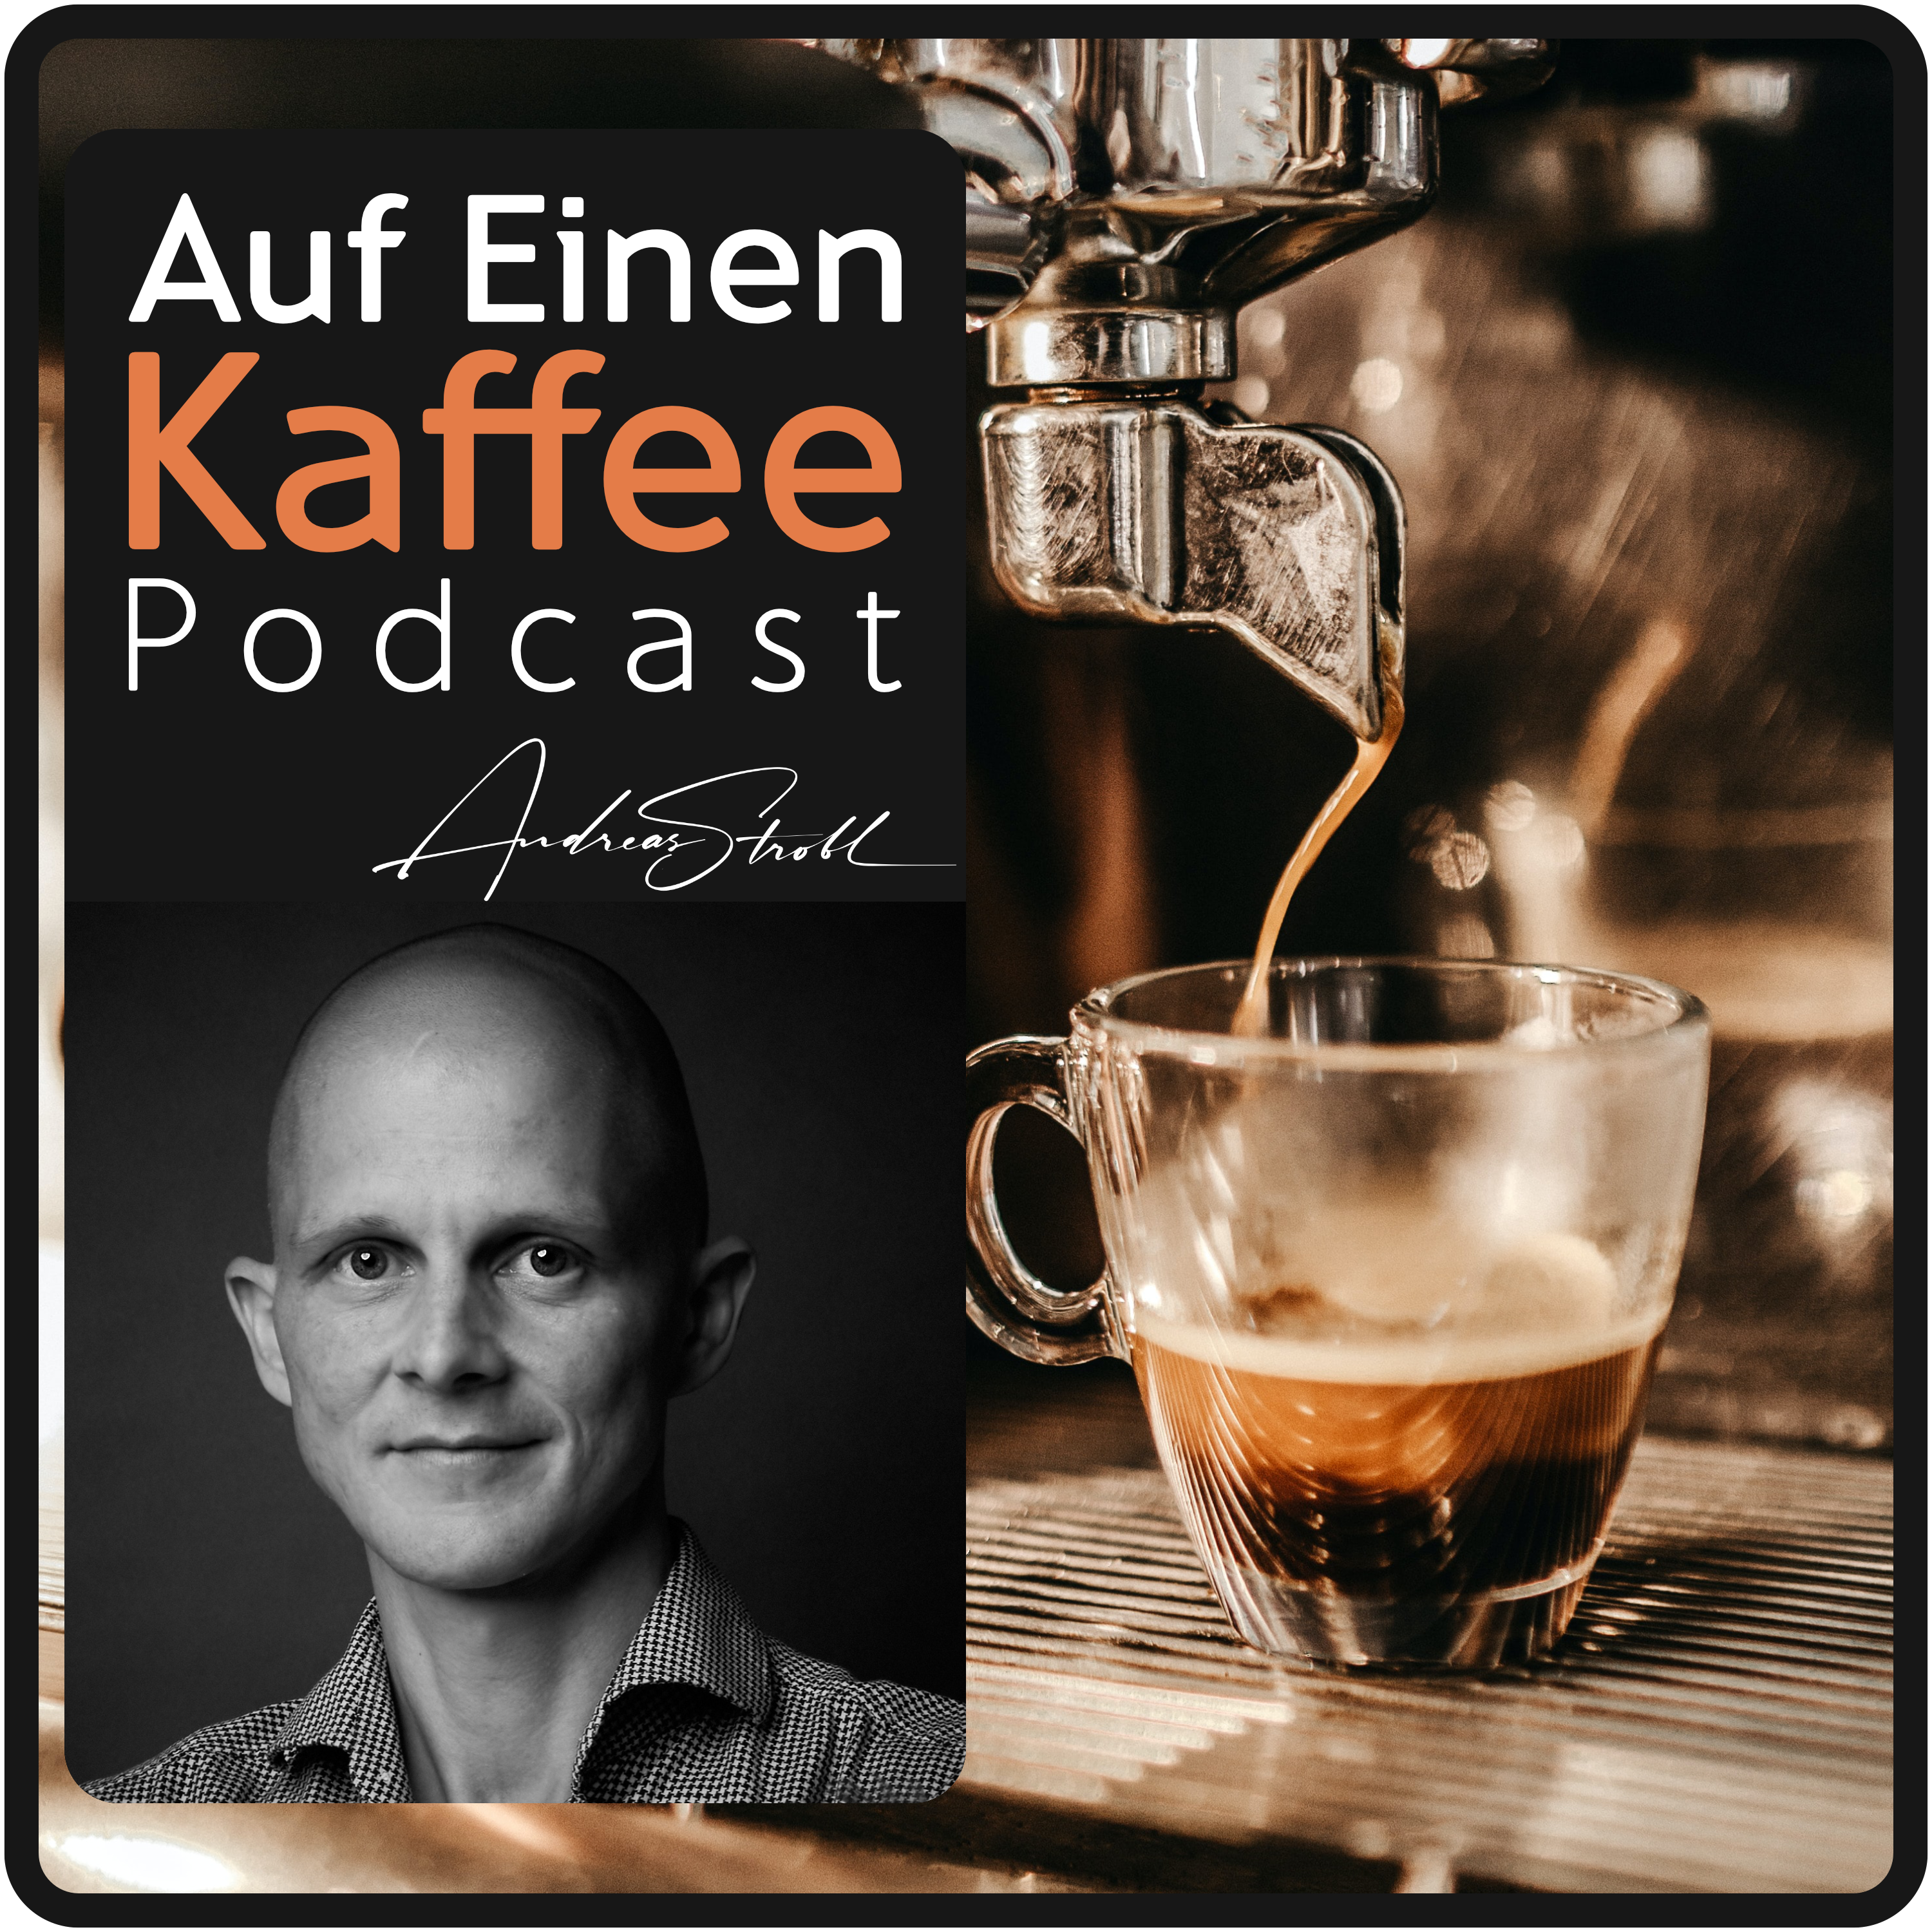 Podcast-Cover - AufEinenKaffee - Mark 1 - 3000px